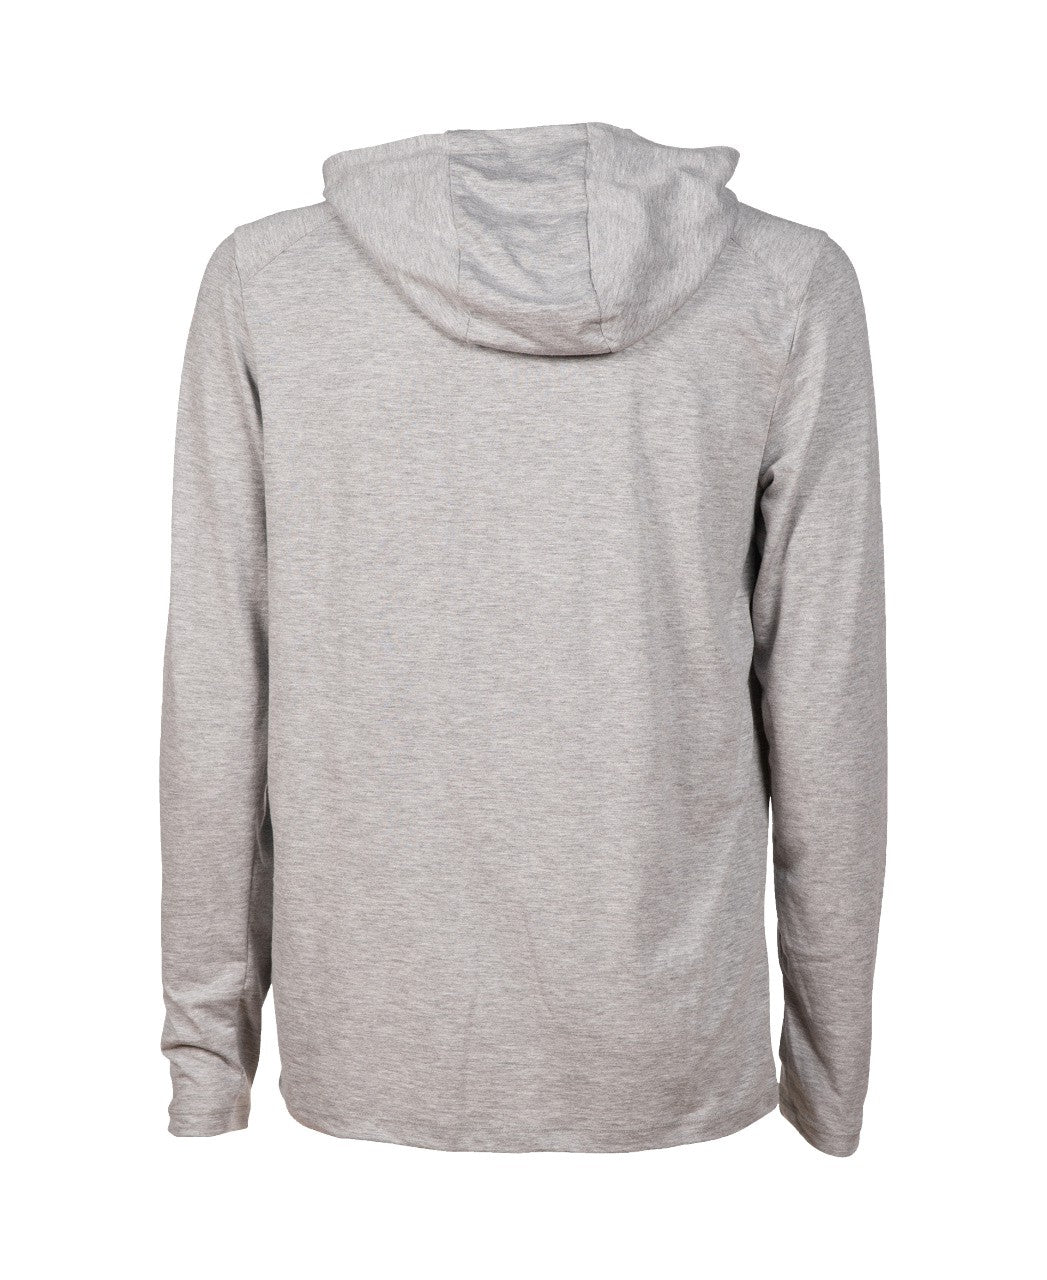 Team Hooded Long Sleeve T-Shirt Panel heather-grey